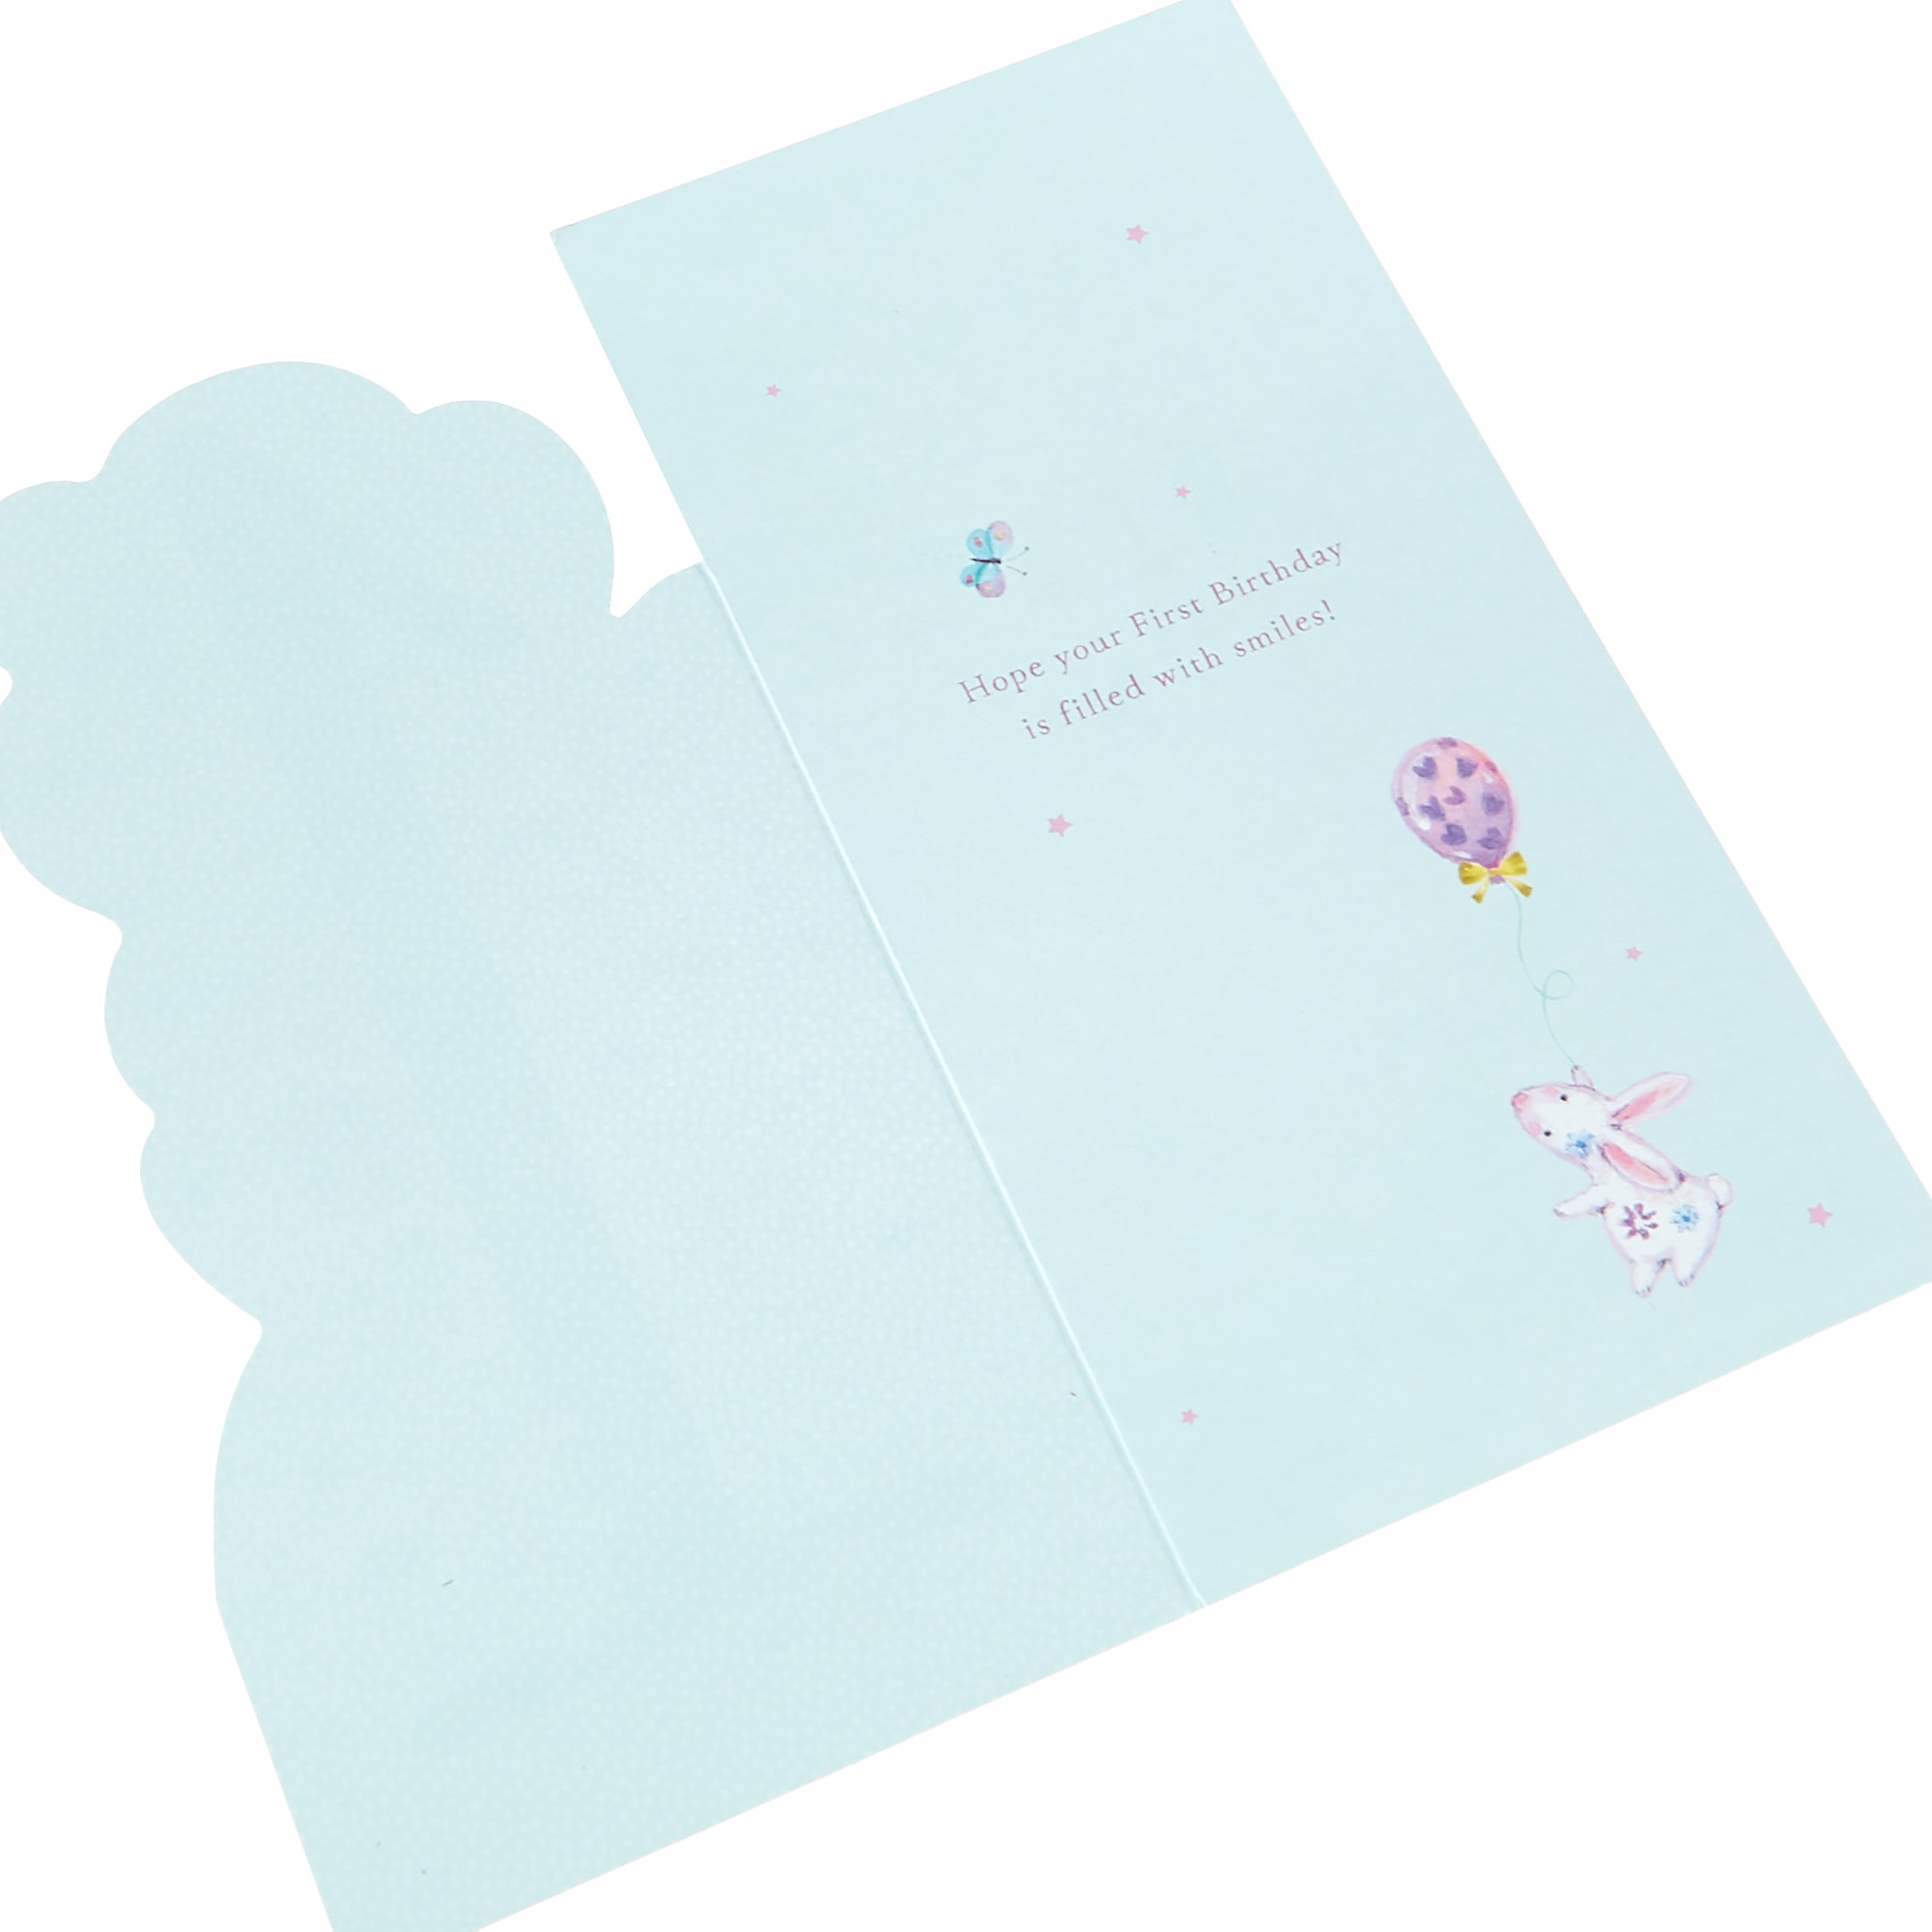 Personalised Wedding Card - Floral Rosette